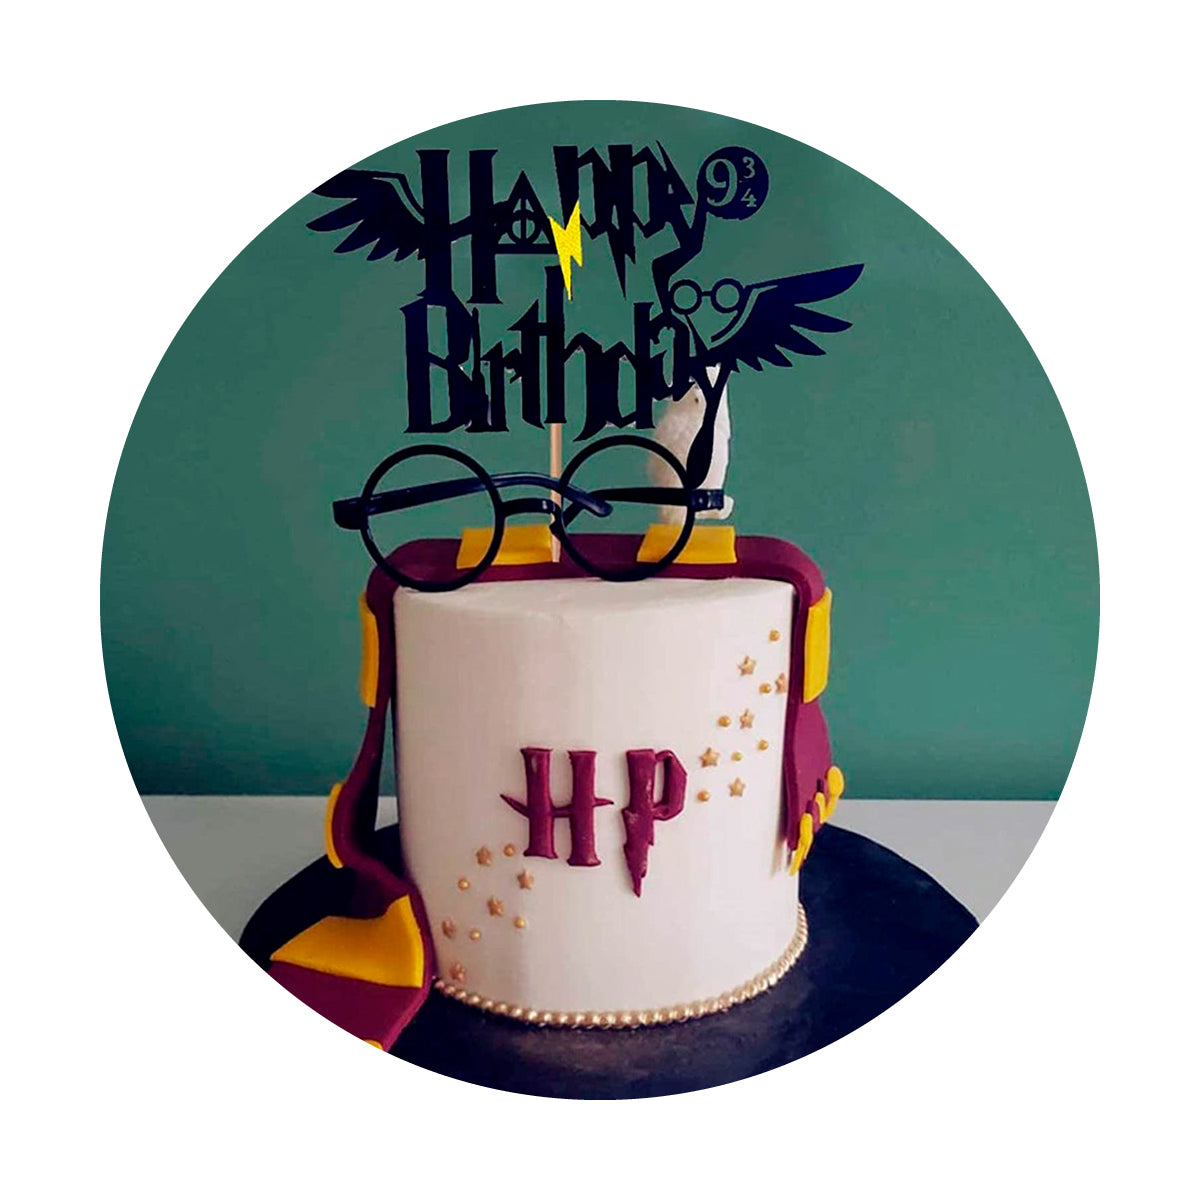  Harry Potter Tarjeta de cumpleaños 8 : Productos de